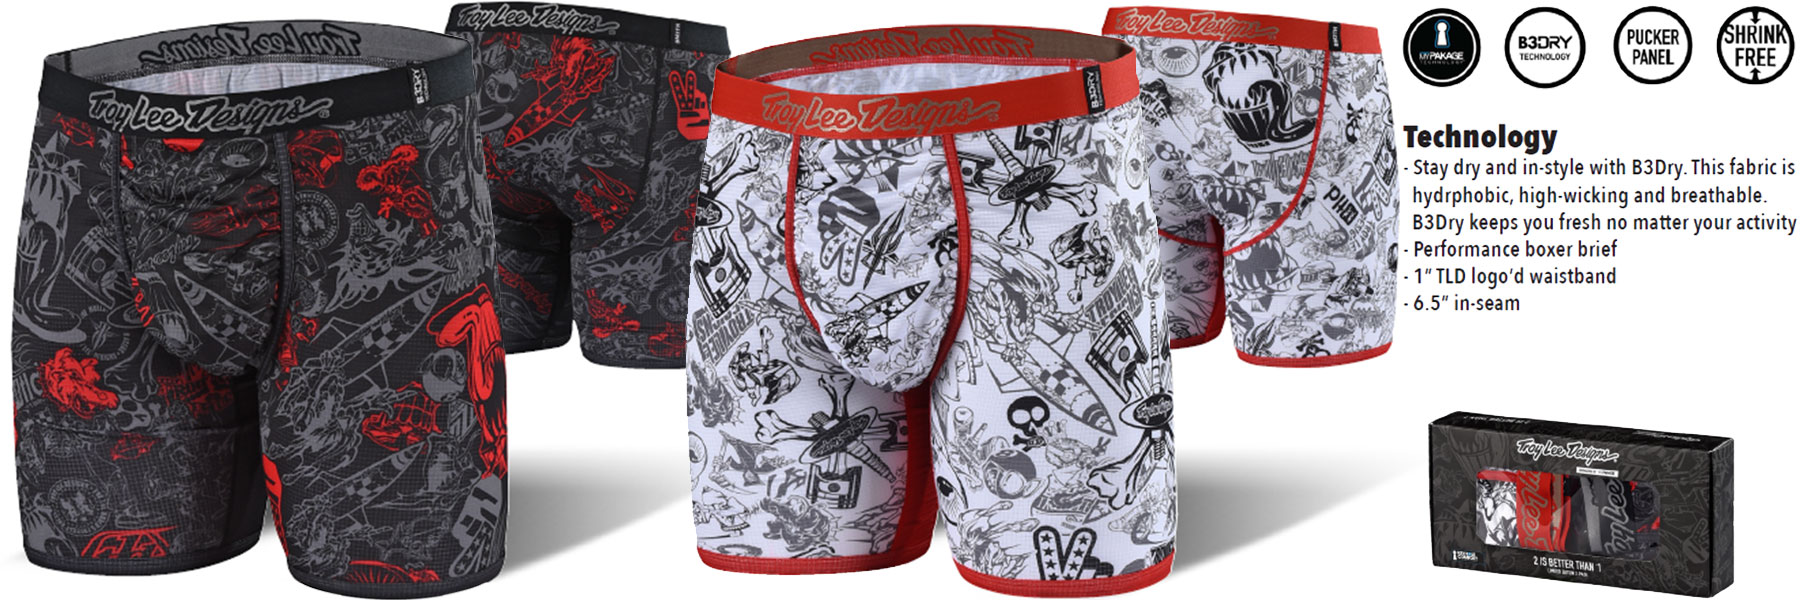 Troy Lee Designs - My Pakage Performance Underwear (2-Pack Limited